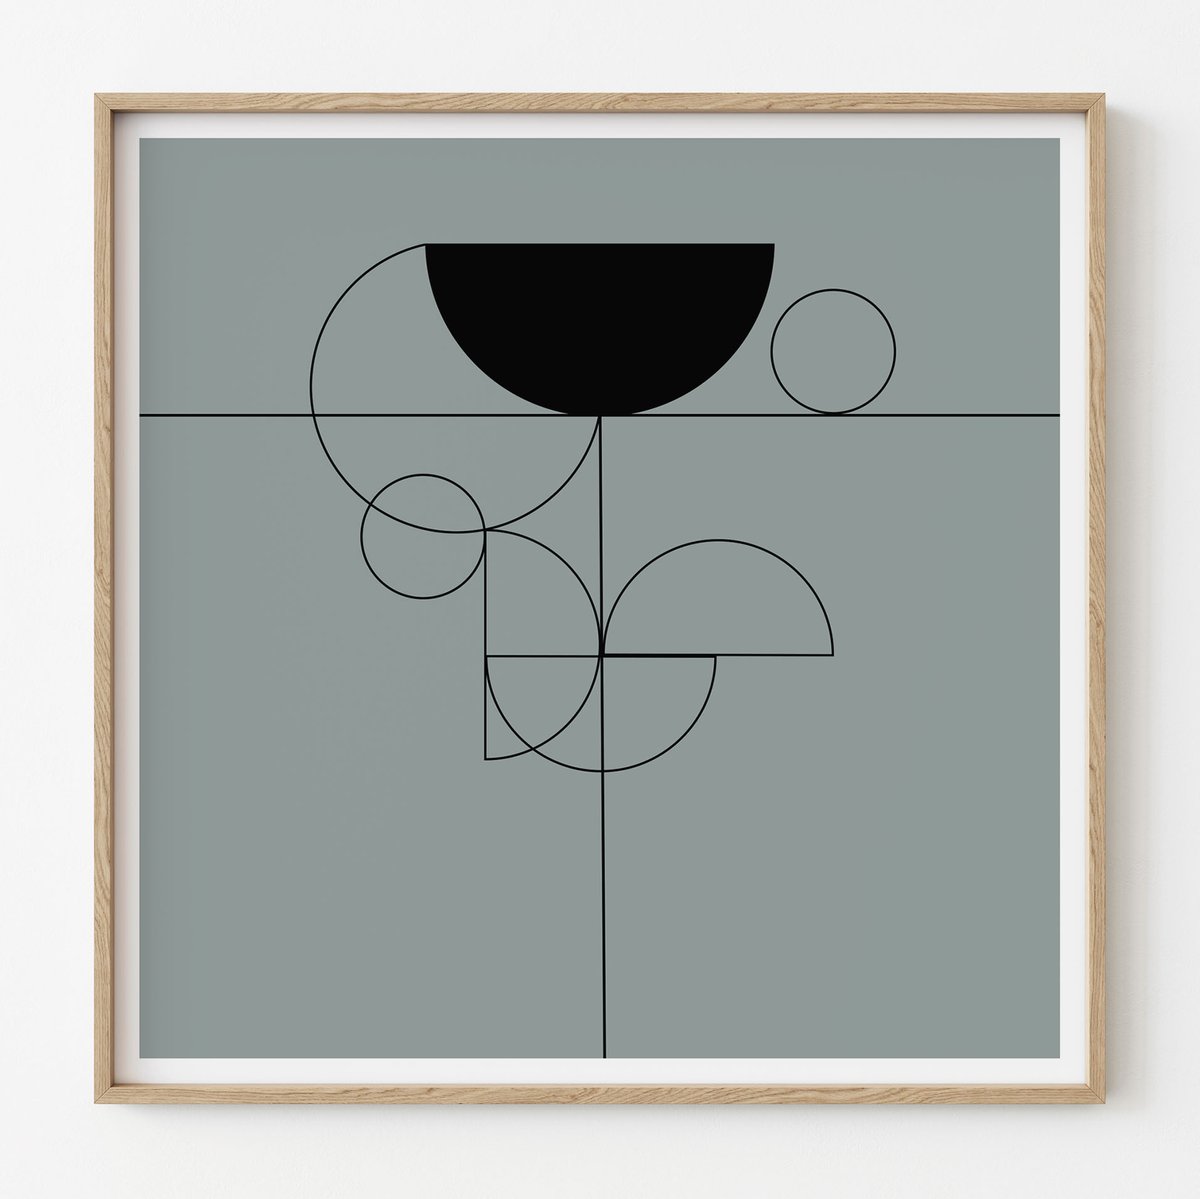 Black Flower (in abstract). Re-discovering my love of geometric art with this drawing🖤 karinacoghlin.com #art #abstractart #geometricart #artprint #gicleeprint #minimalistart #bauhaus #print #suffolkartist #simplicity #interiordesign #suffolk #weekendvibes